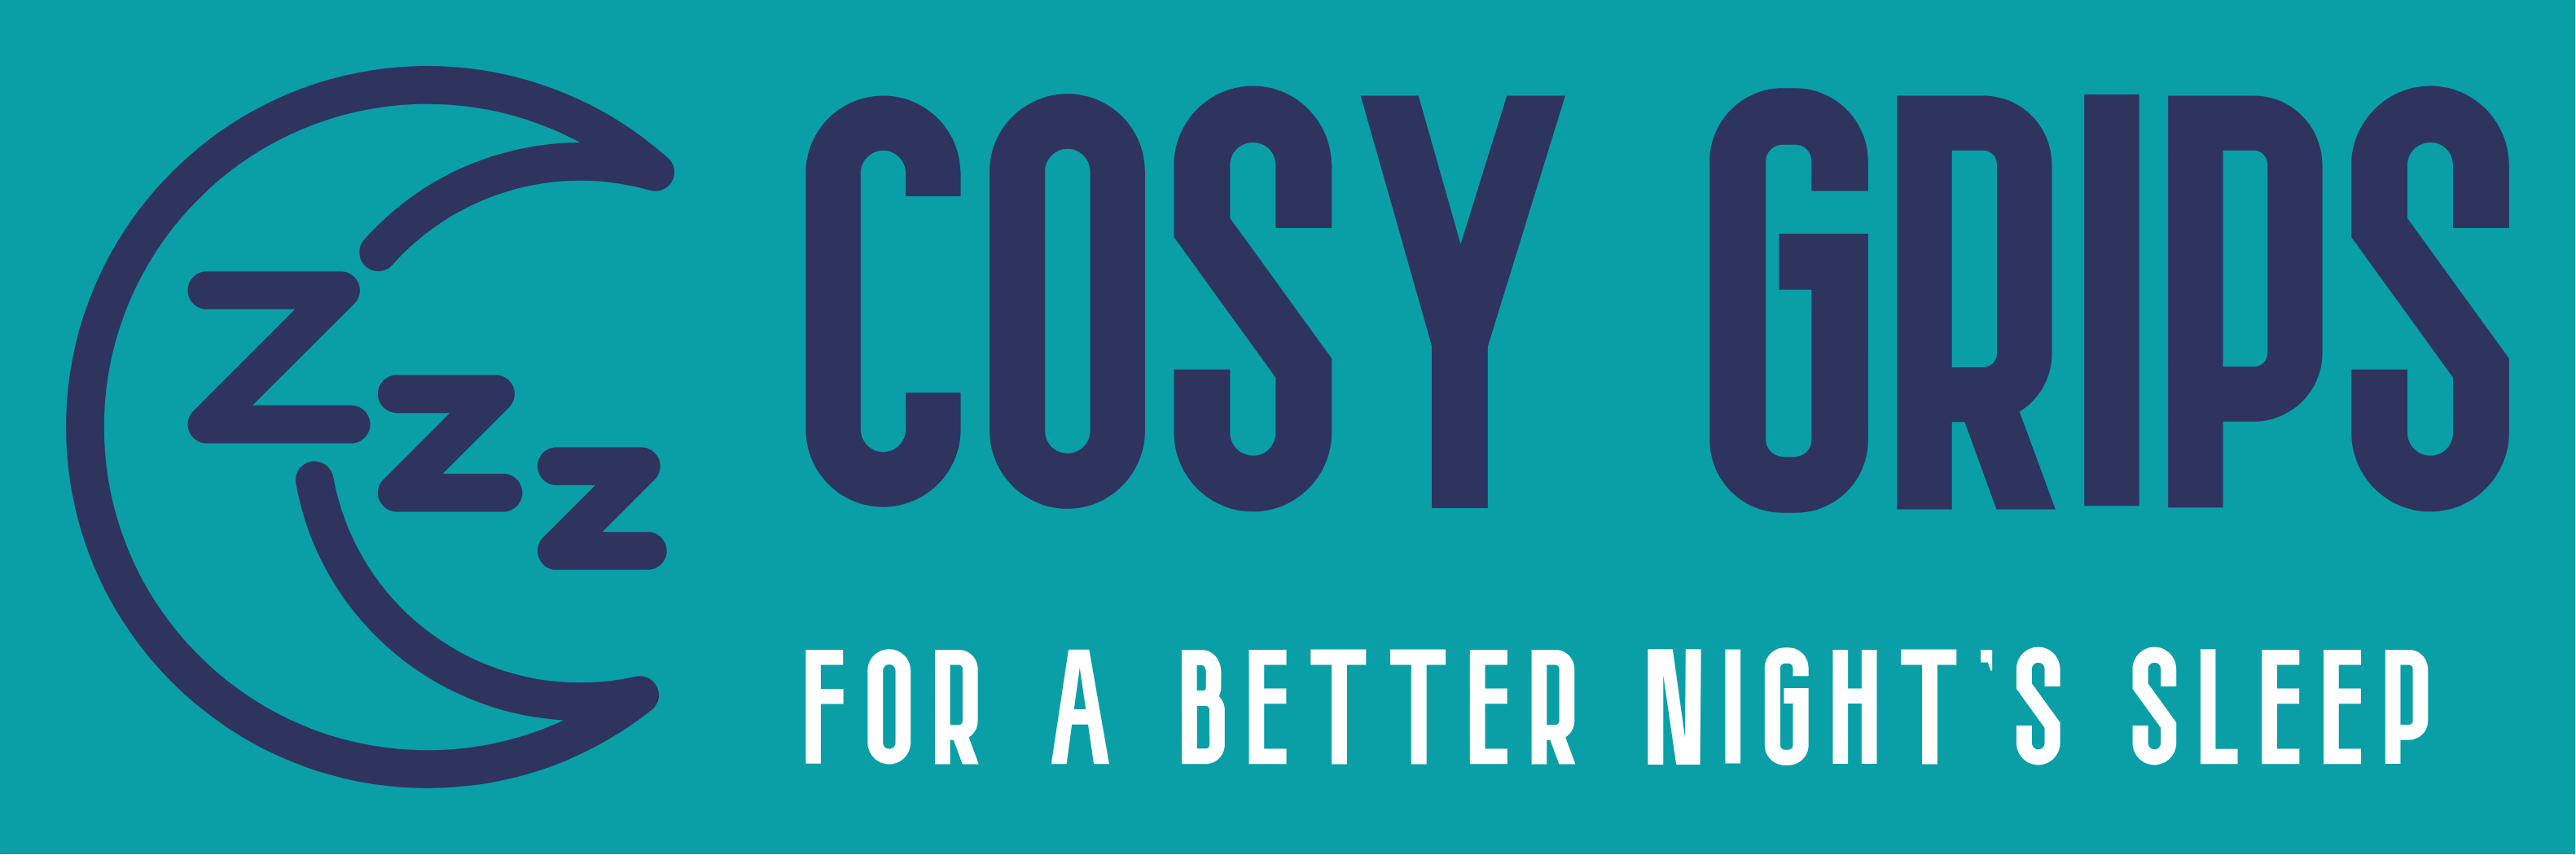 Cosy Grips Duvet Clips's logo